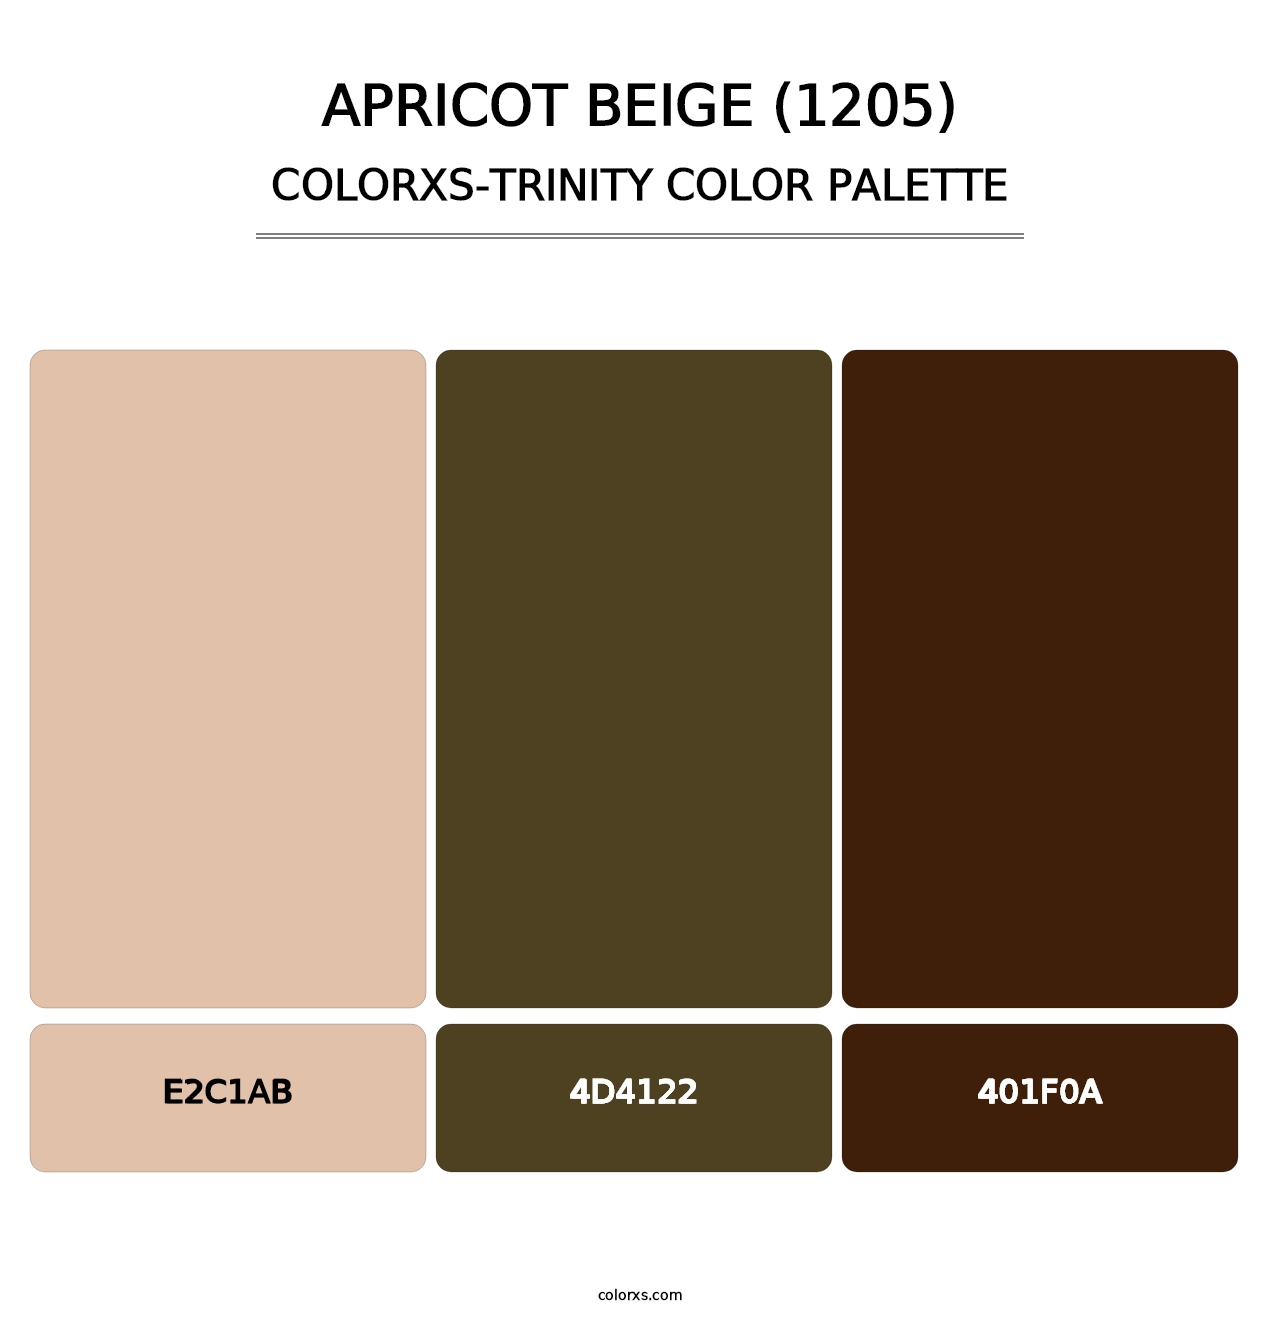 Apricot Beige (1205) - Colorxs Trinity Palette